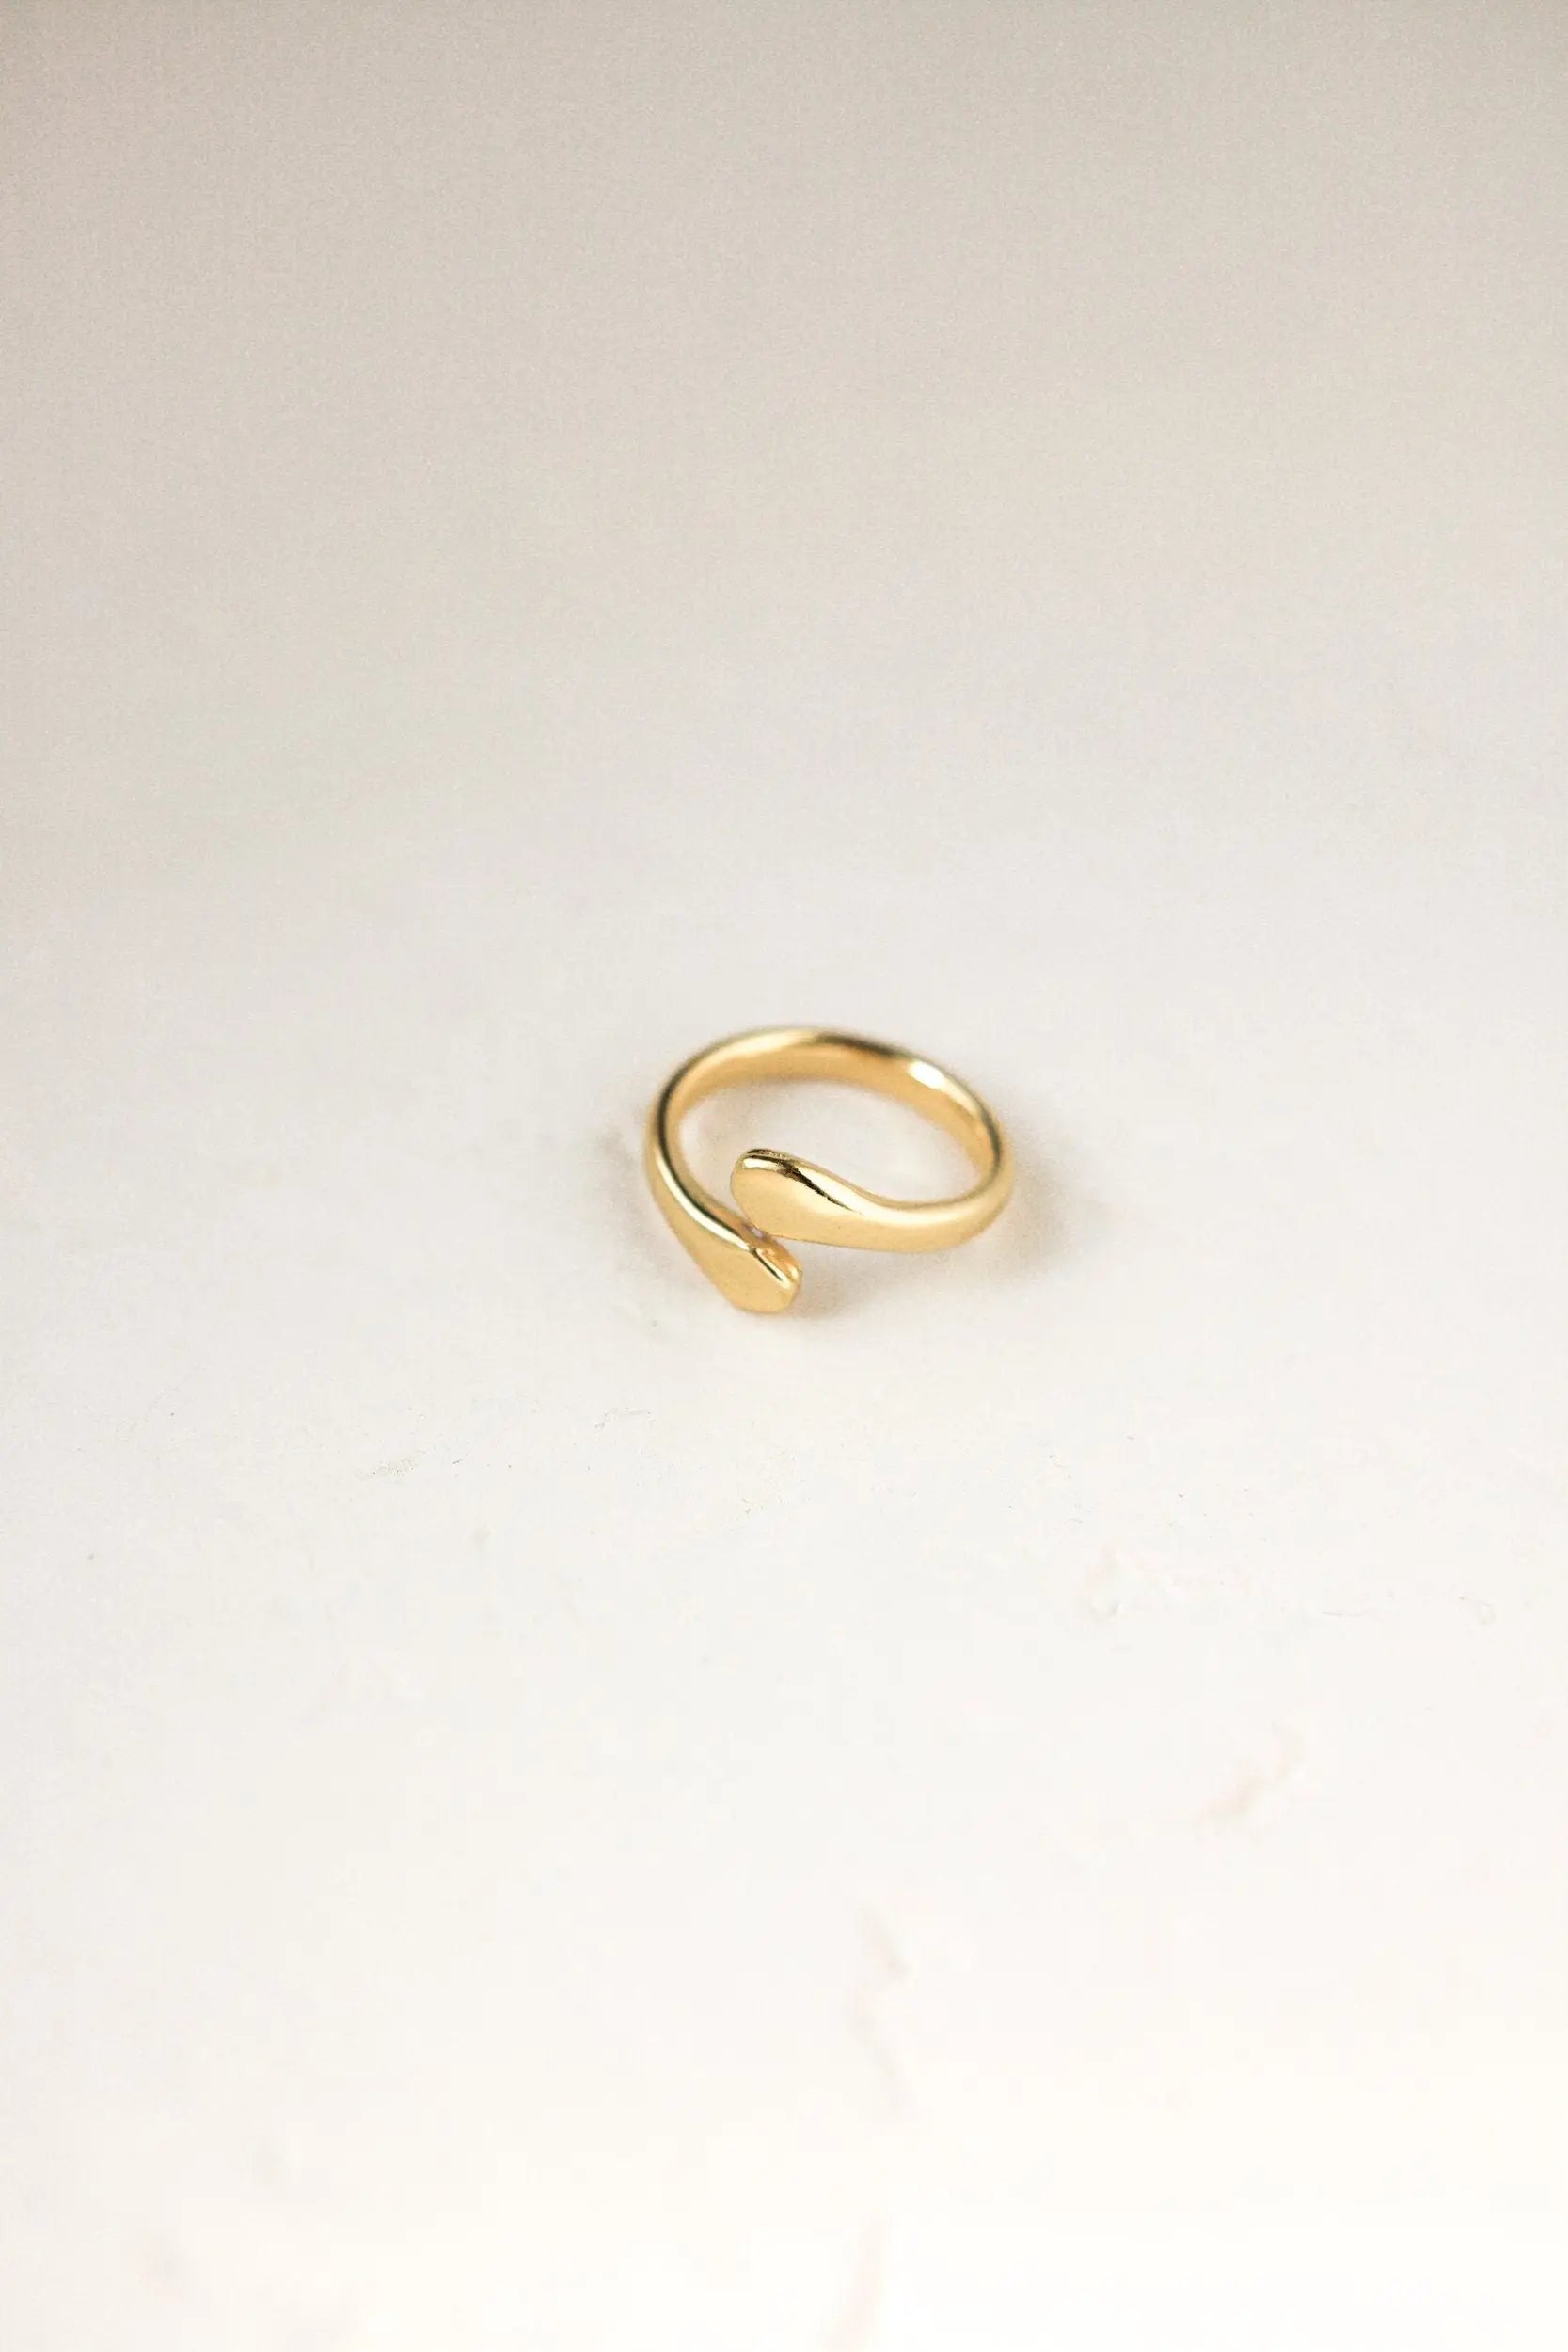 Snake Wrap RING,Adjustable Gold Greek ring for women, Minimal Serpent Ring, Ethnic Boho Ring, 24K Gold plated ring, Greek jewelry